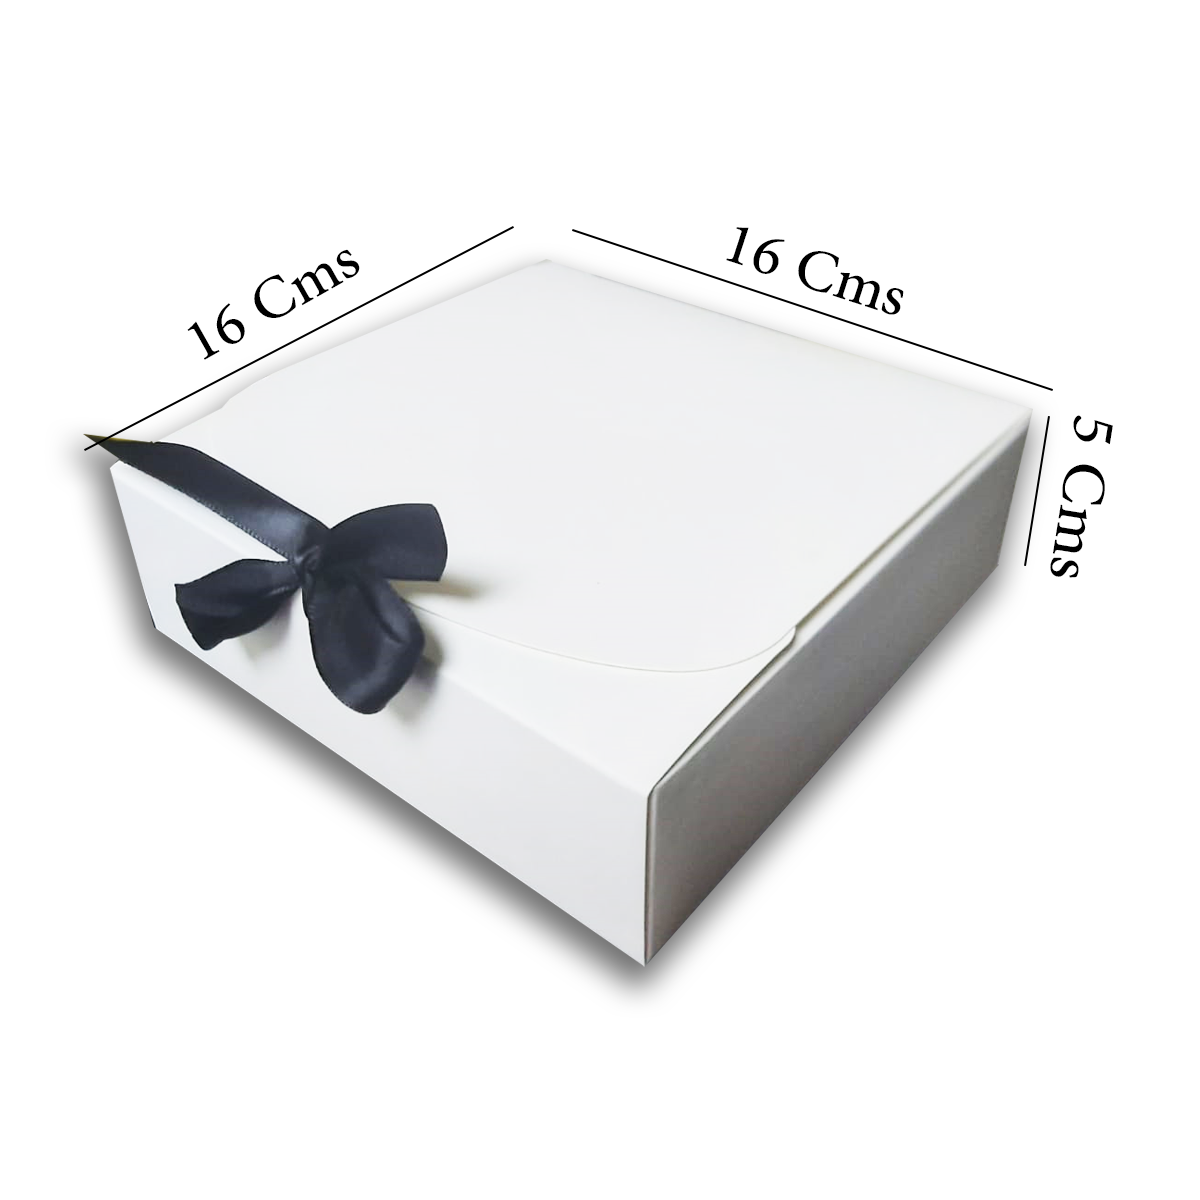 Small Silk Ribbon Closure Design BROWN Kraft Gift boxes (16x16x5Cms) 12Pc Pack - White